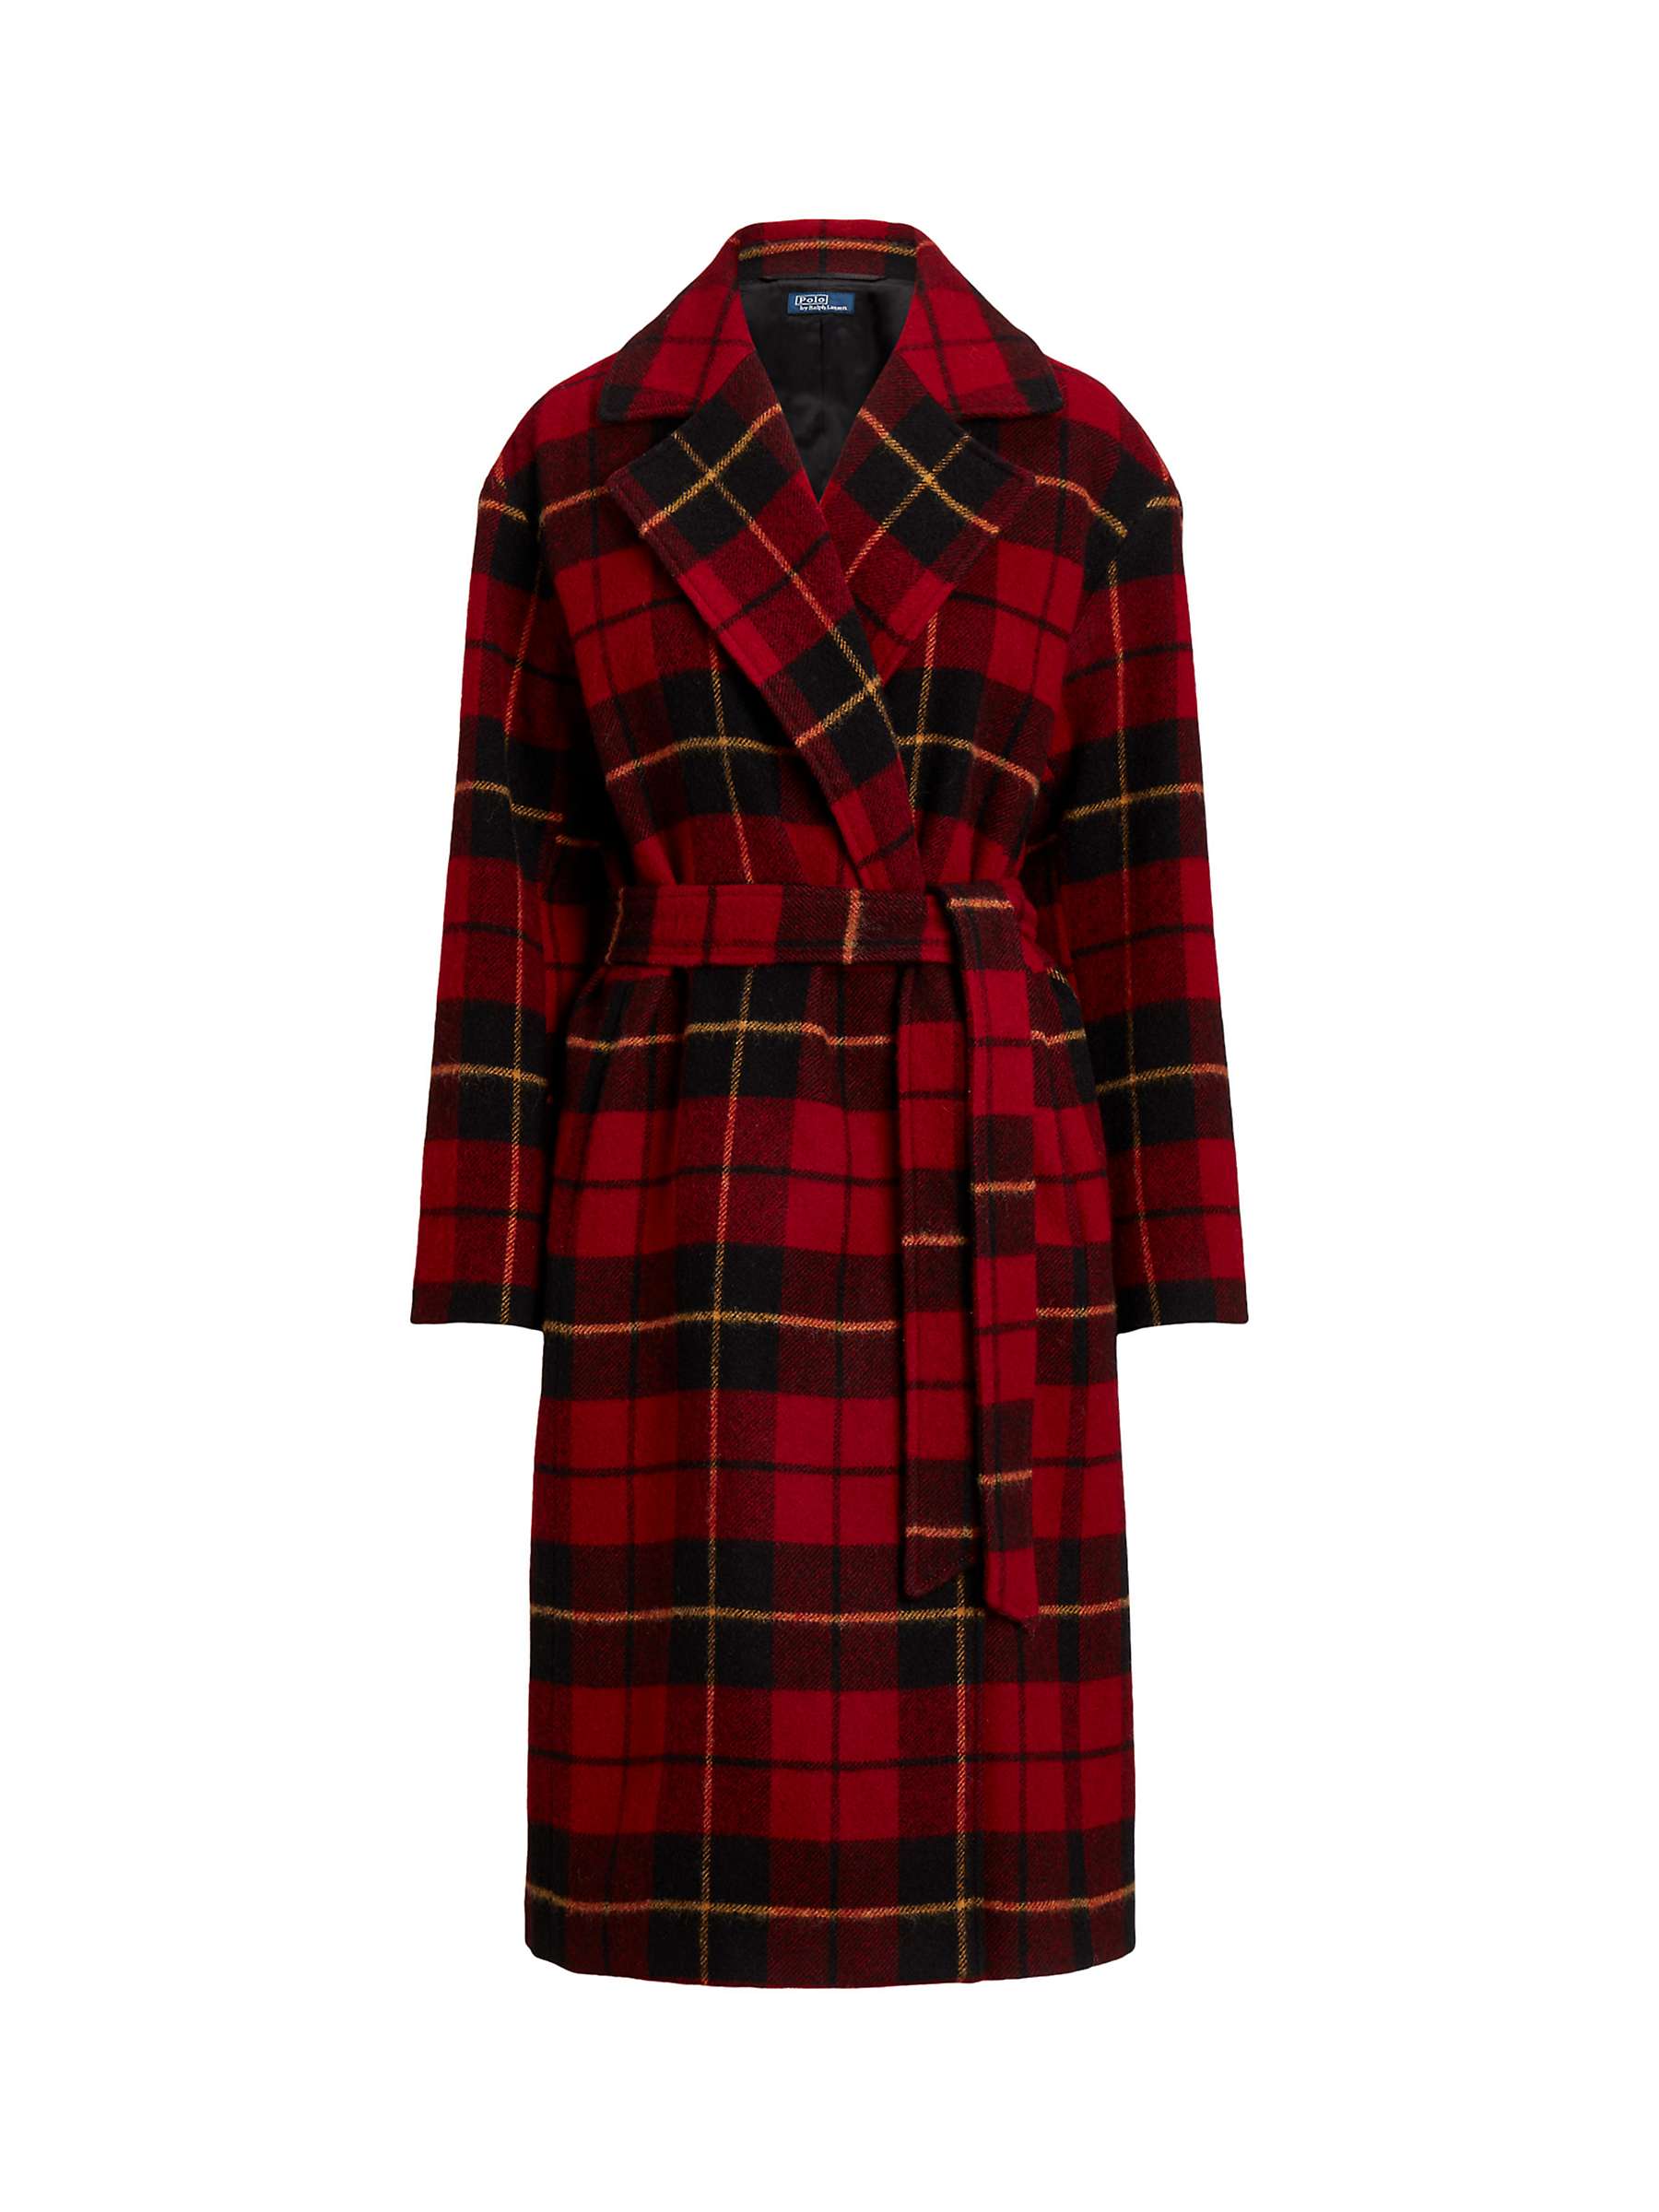 Buy Polo Ralph Lauren Jacky Wool Blend Tartan Wrap Coat, Red/Multi Online at johnlewis.com